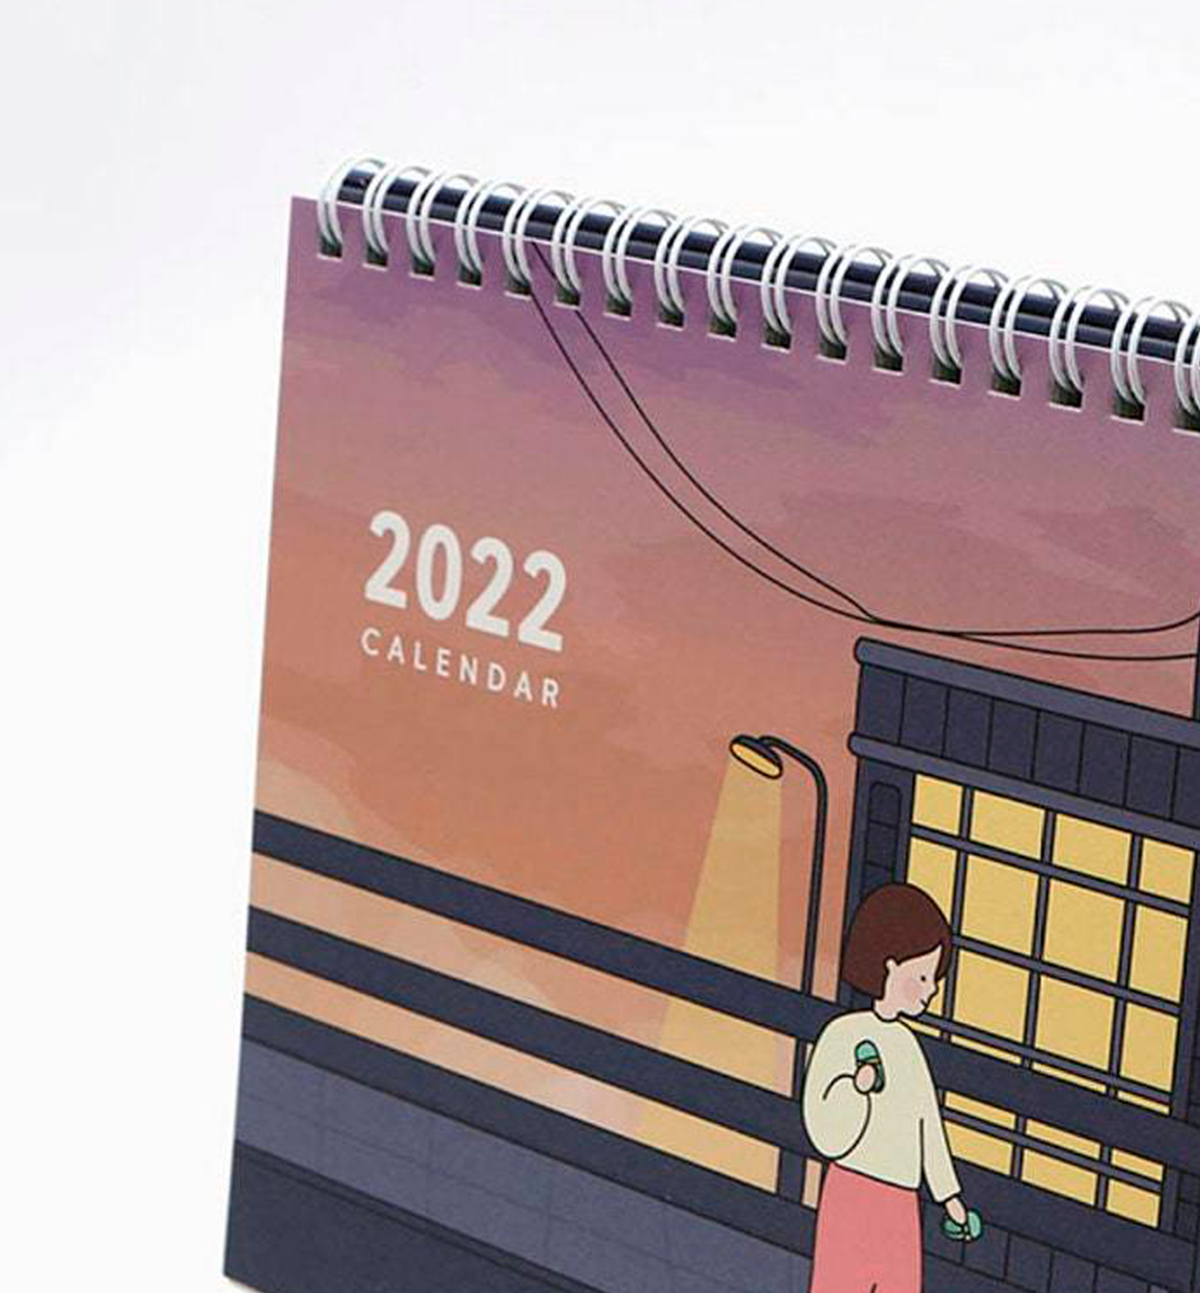 2022 Bori's Desk Calendar